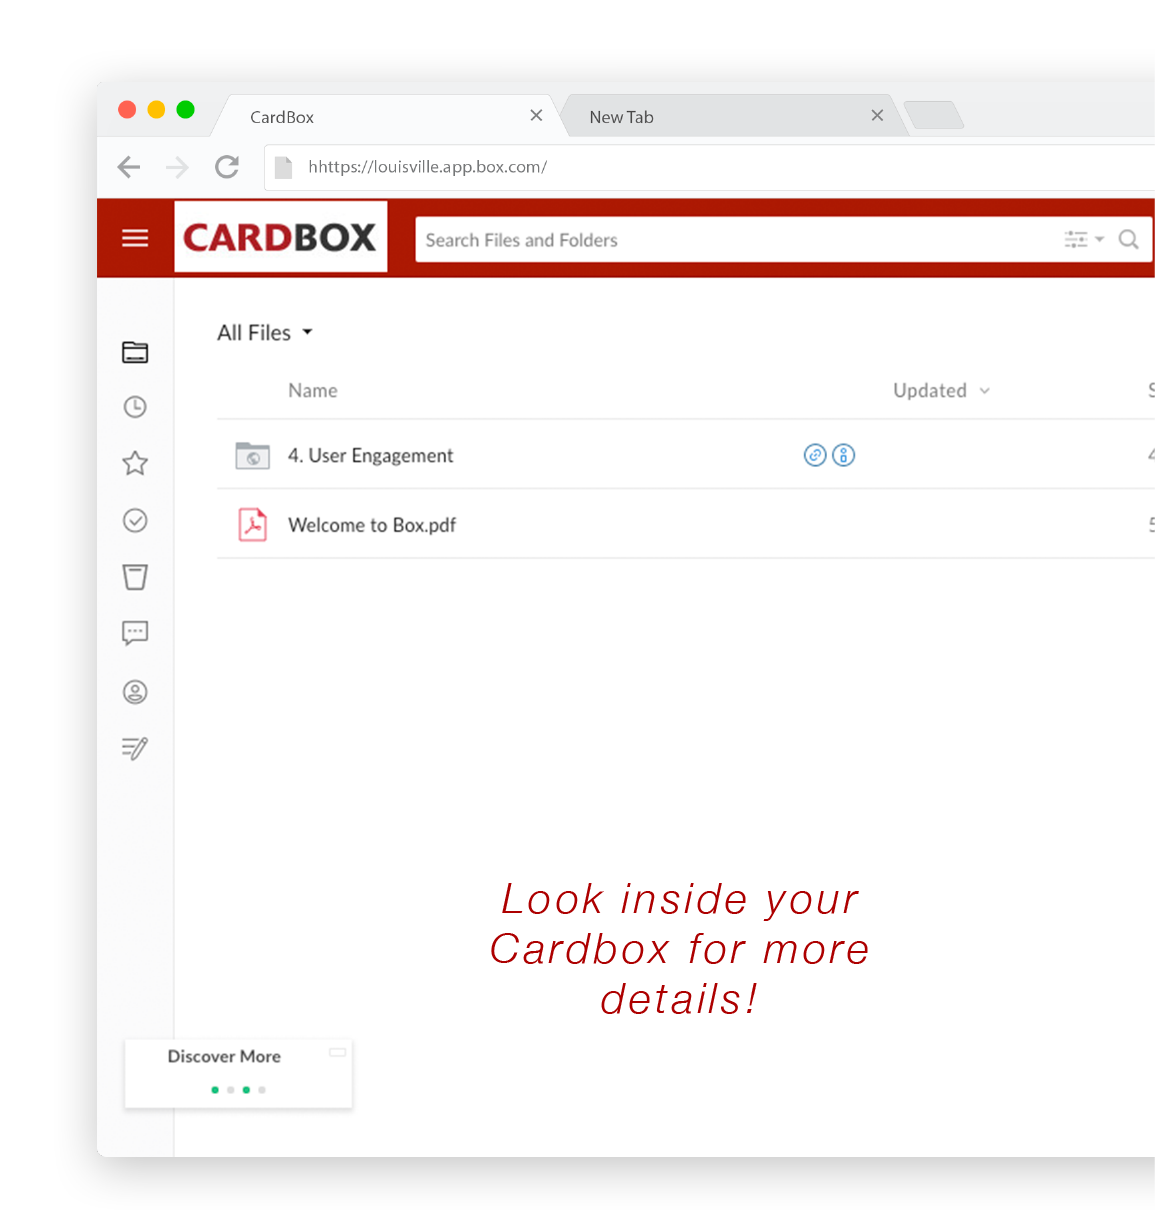 Screenshot of Cardbox web page